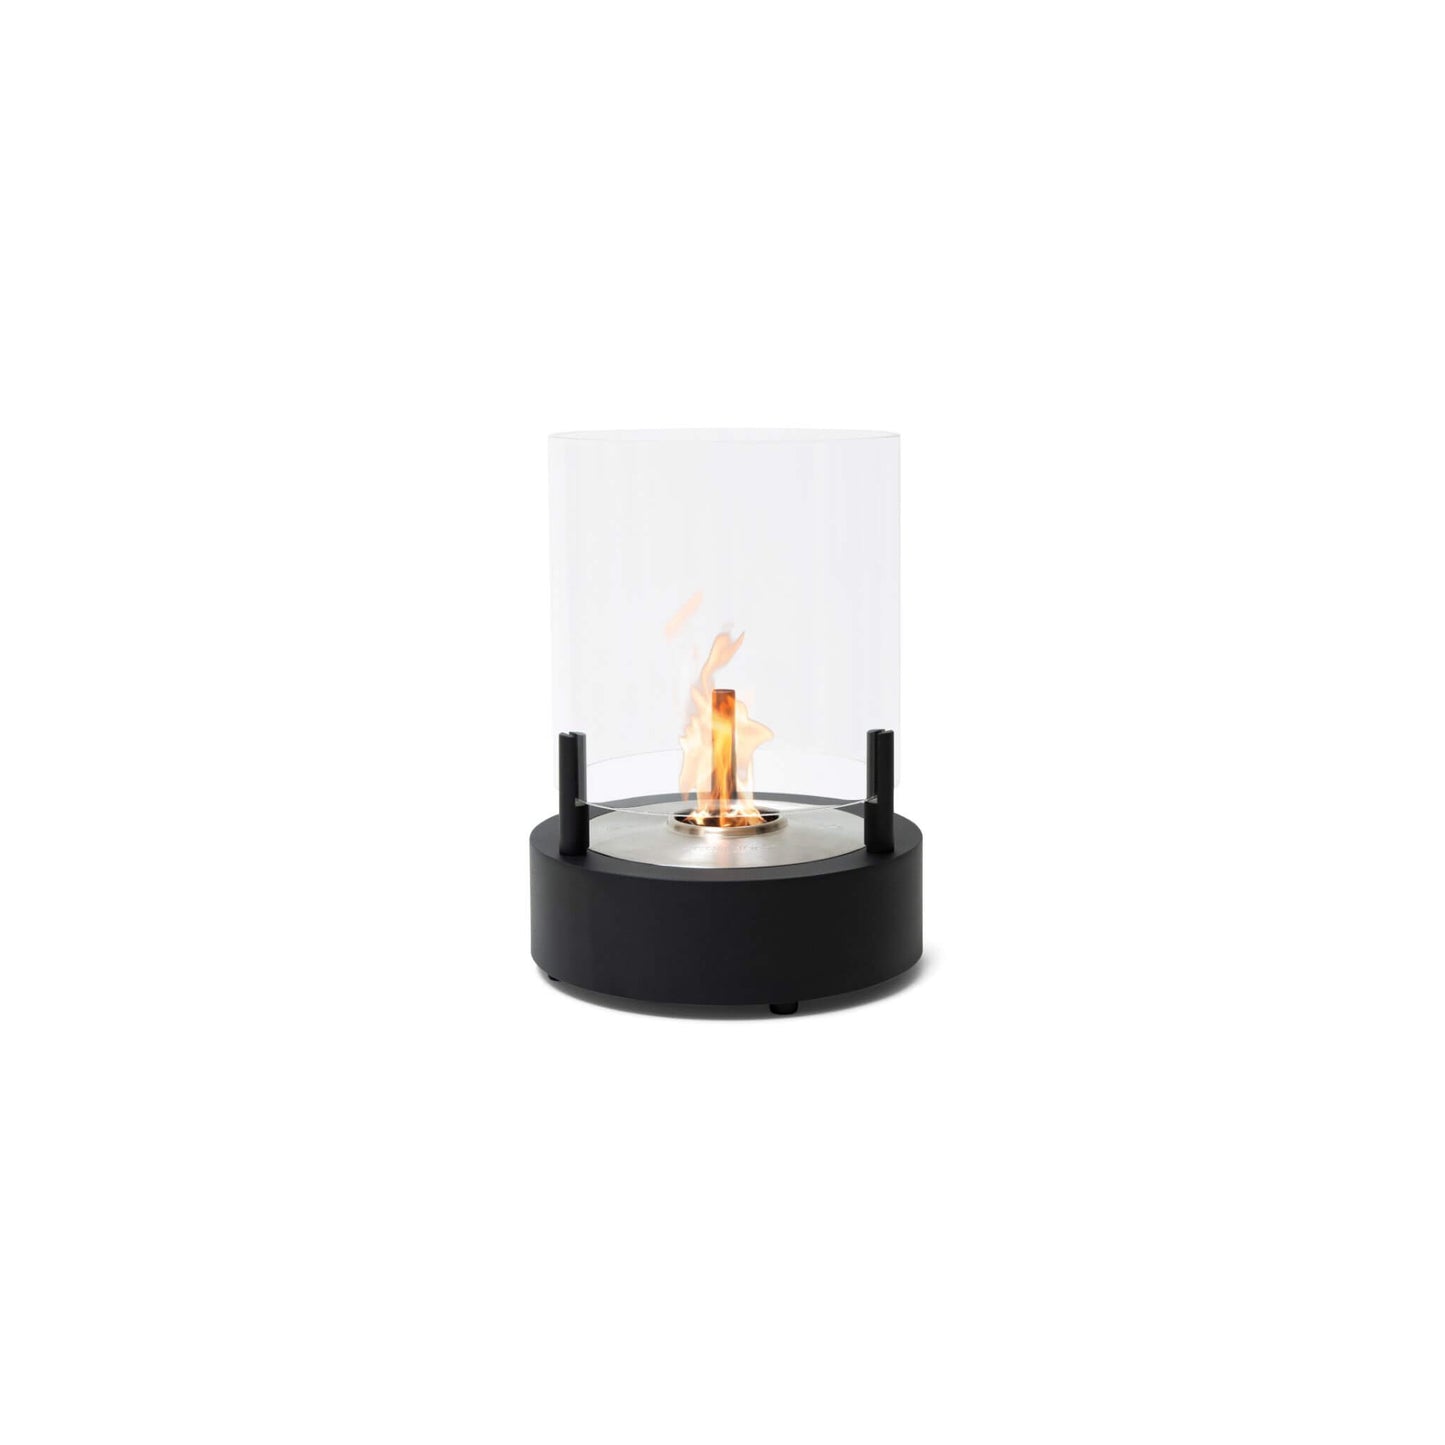 Ecosmart Fire T-Lite 3 Designer Glass Bioethanol Fireplace